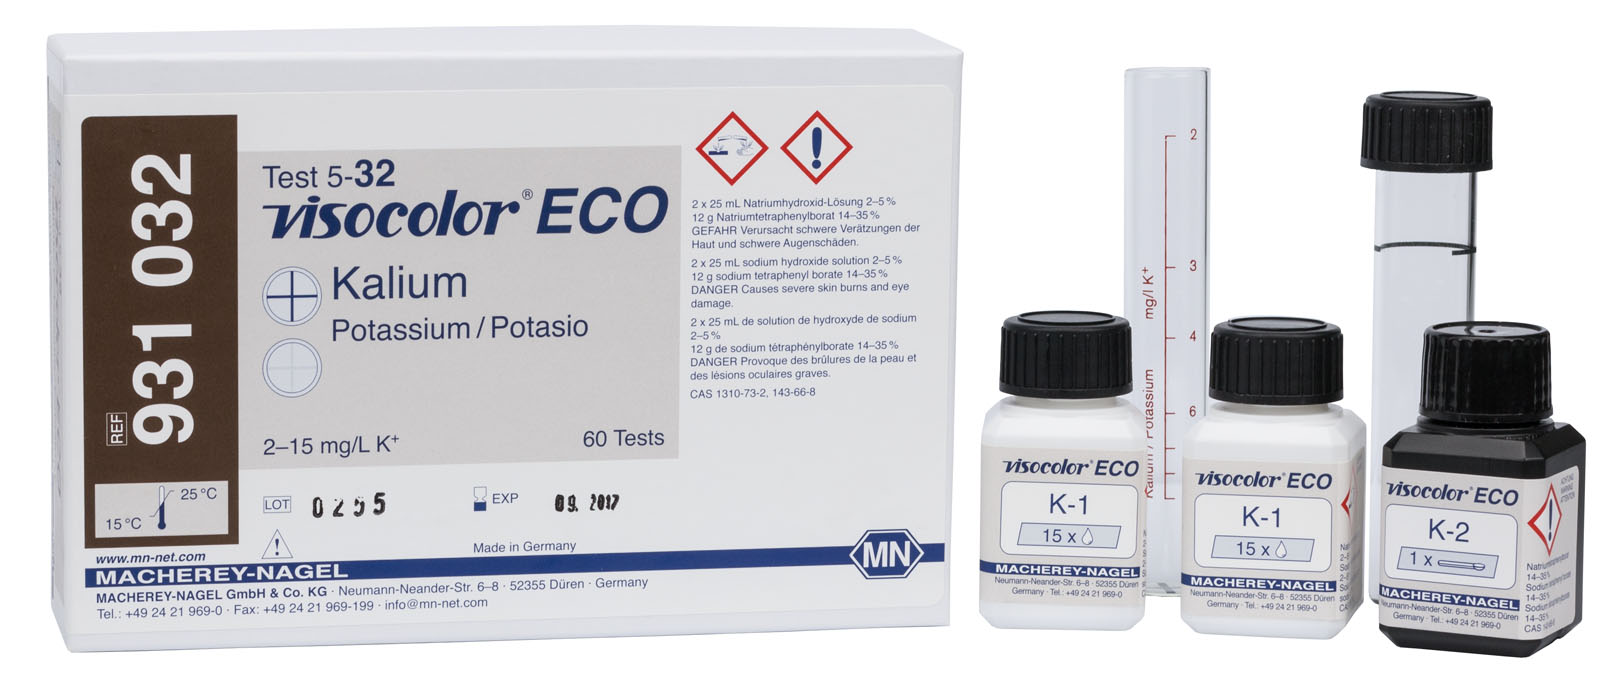 VISOCOLOR® ECO Potassium Test Kit